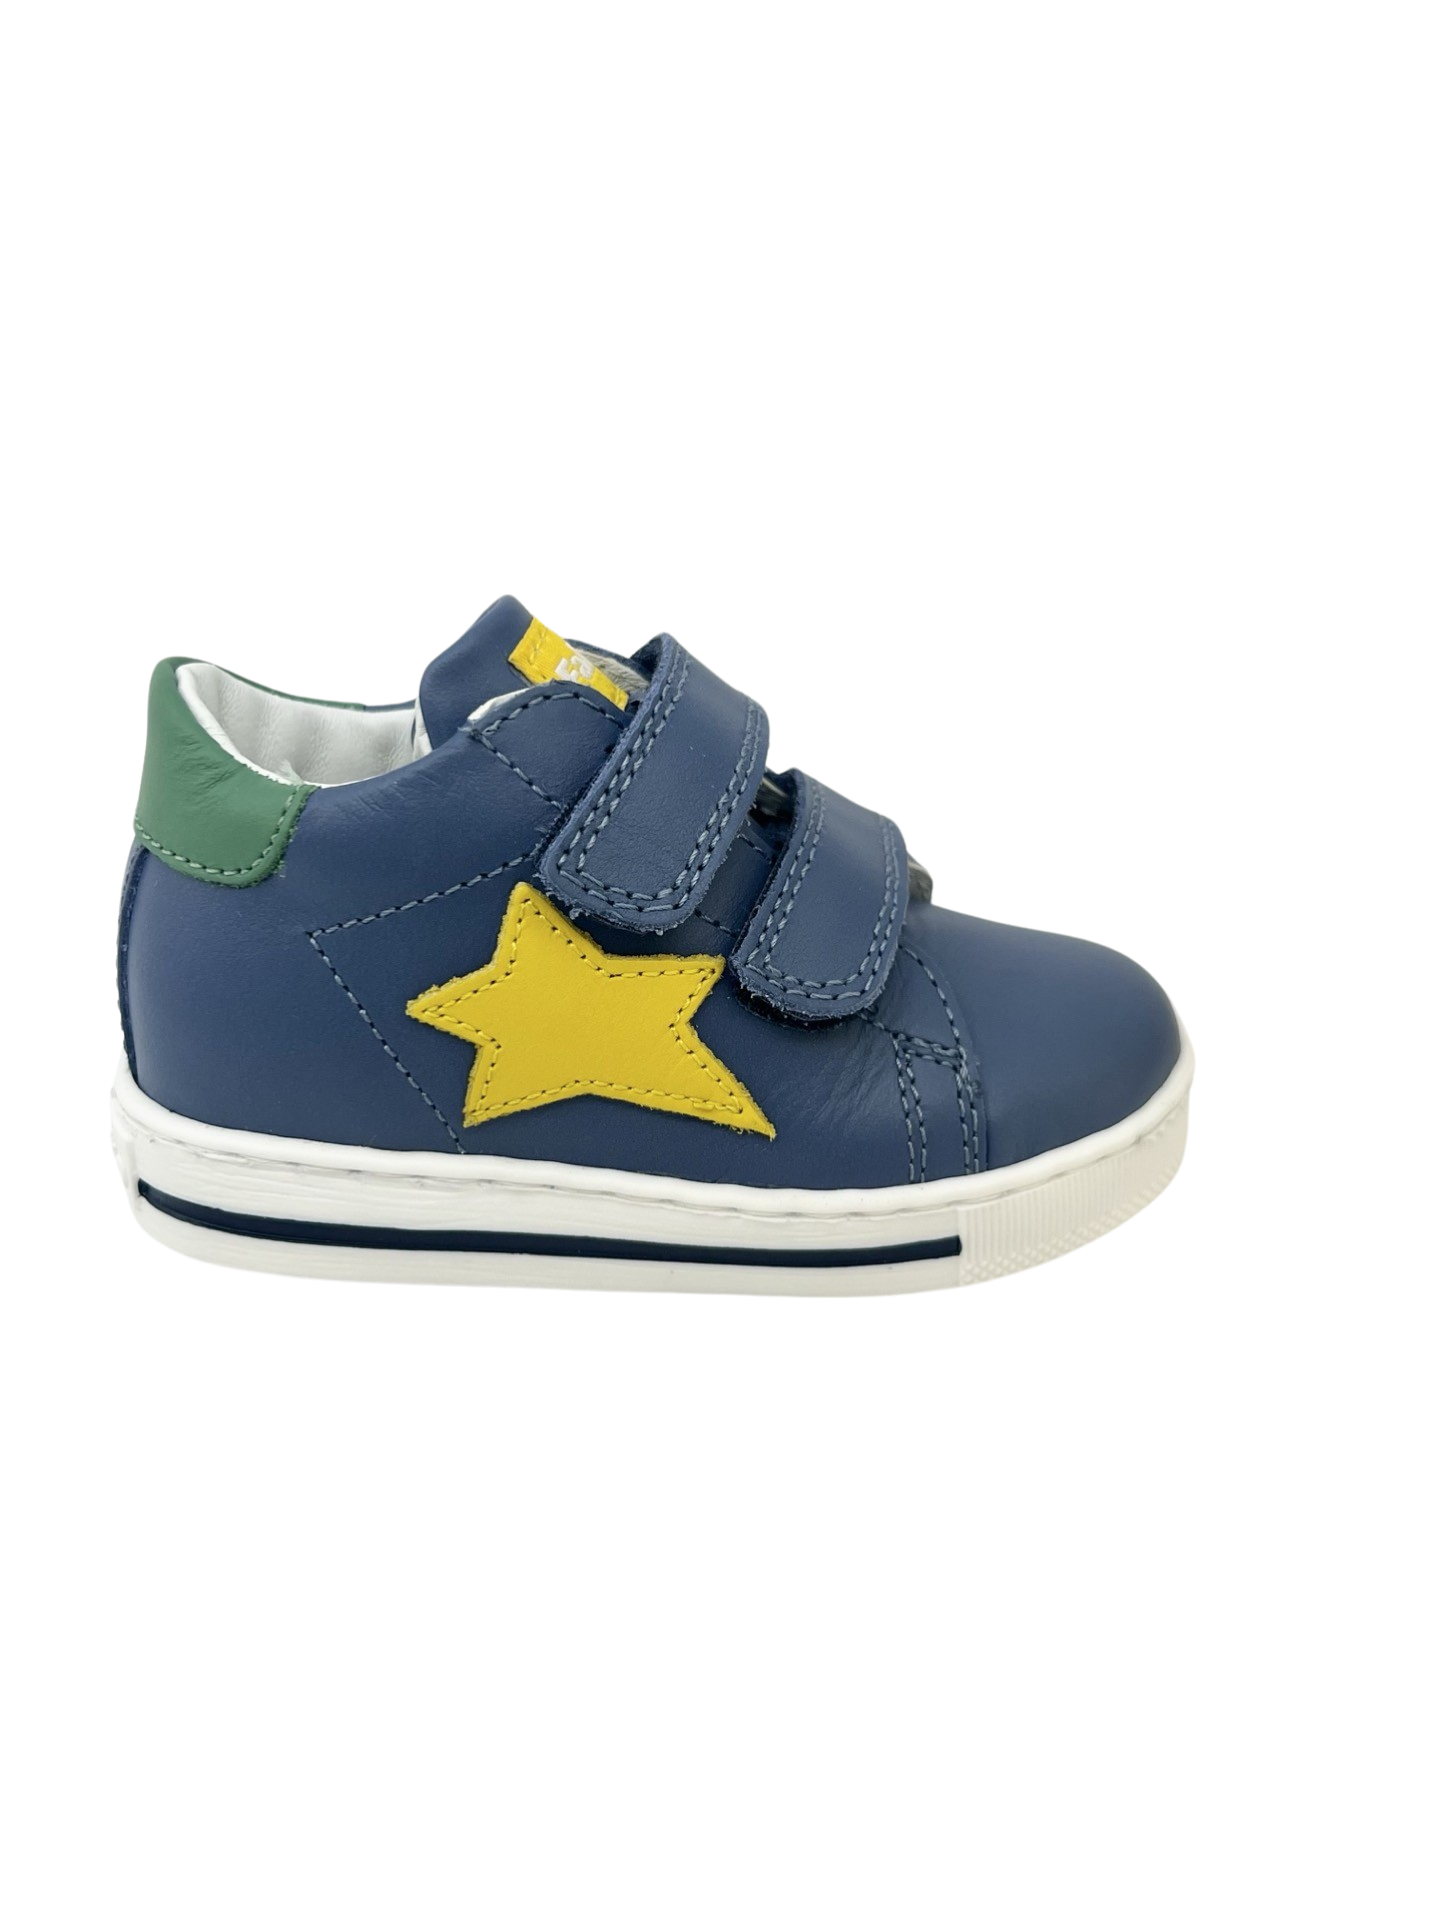 Falcotto Navy - Yellow Double Velcro Star Sneaker -  Sasha